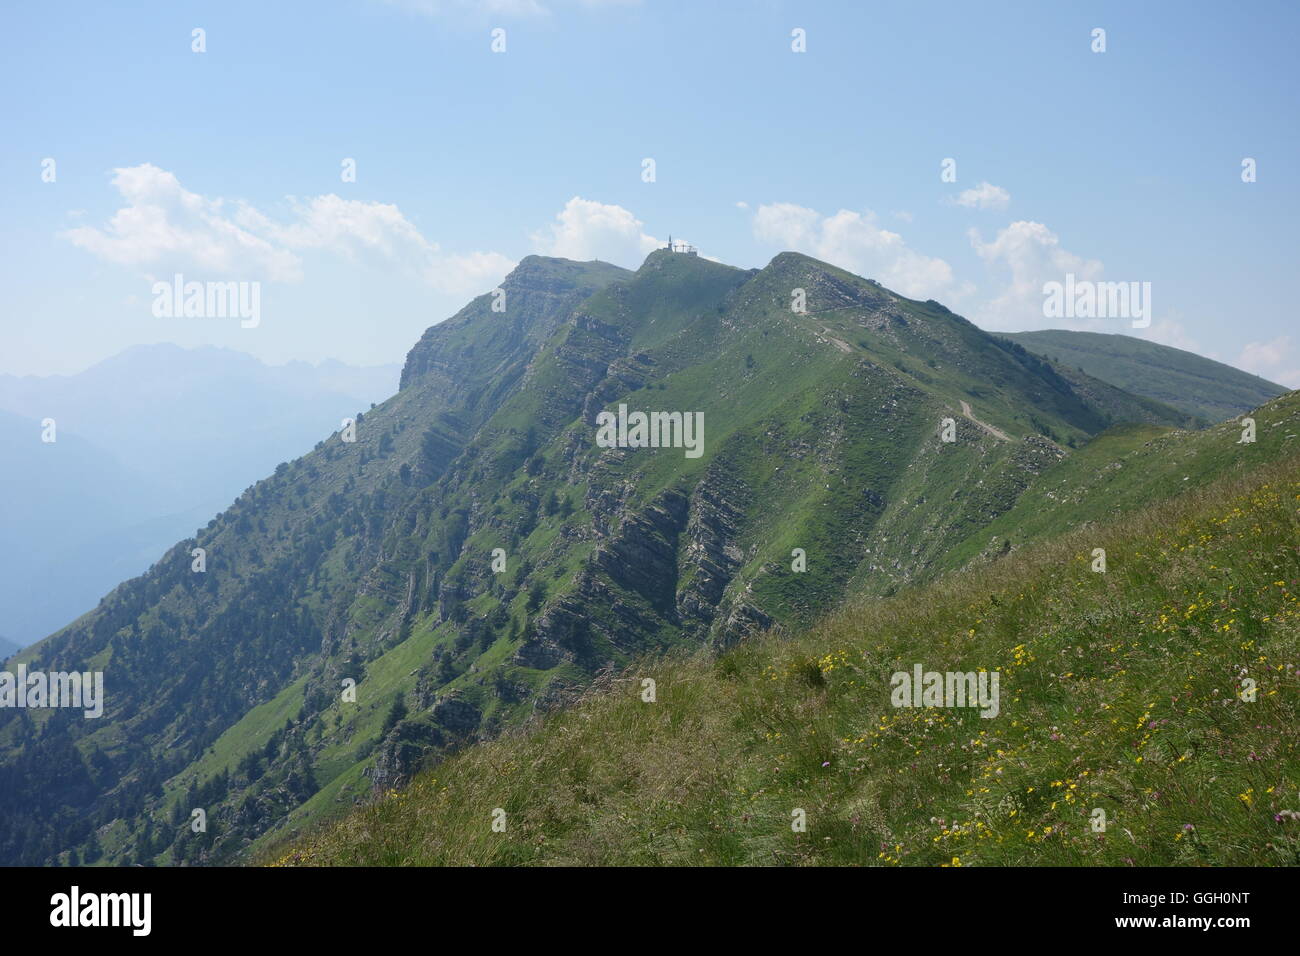 Monte Saccarello (l.) avec Sella della Valleta et Cima della Valletta Punta, Alpes Ligures, Italie Banque D'Images